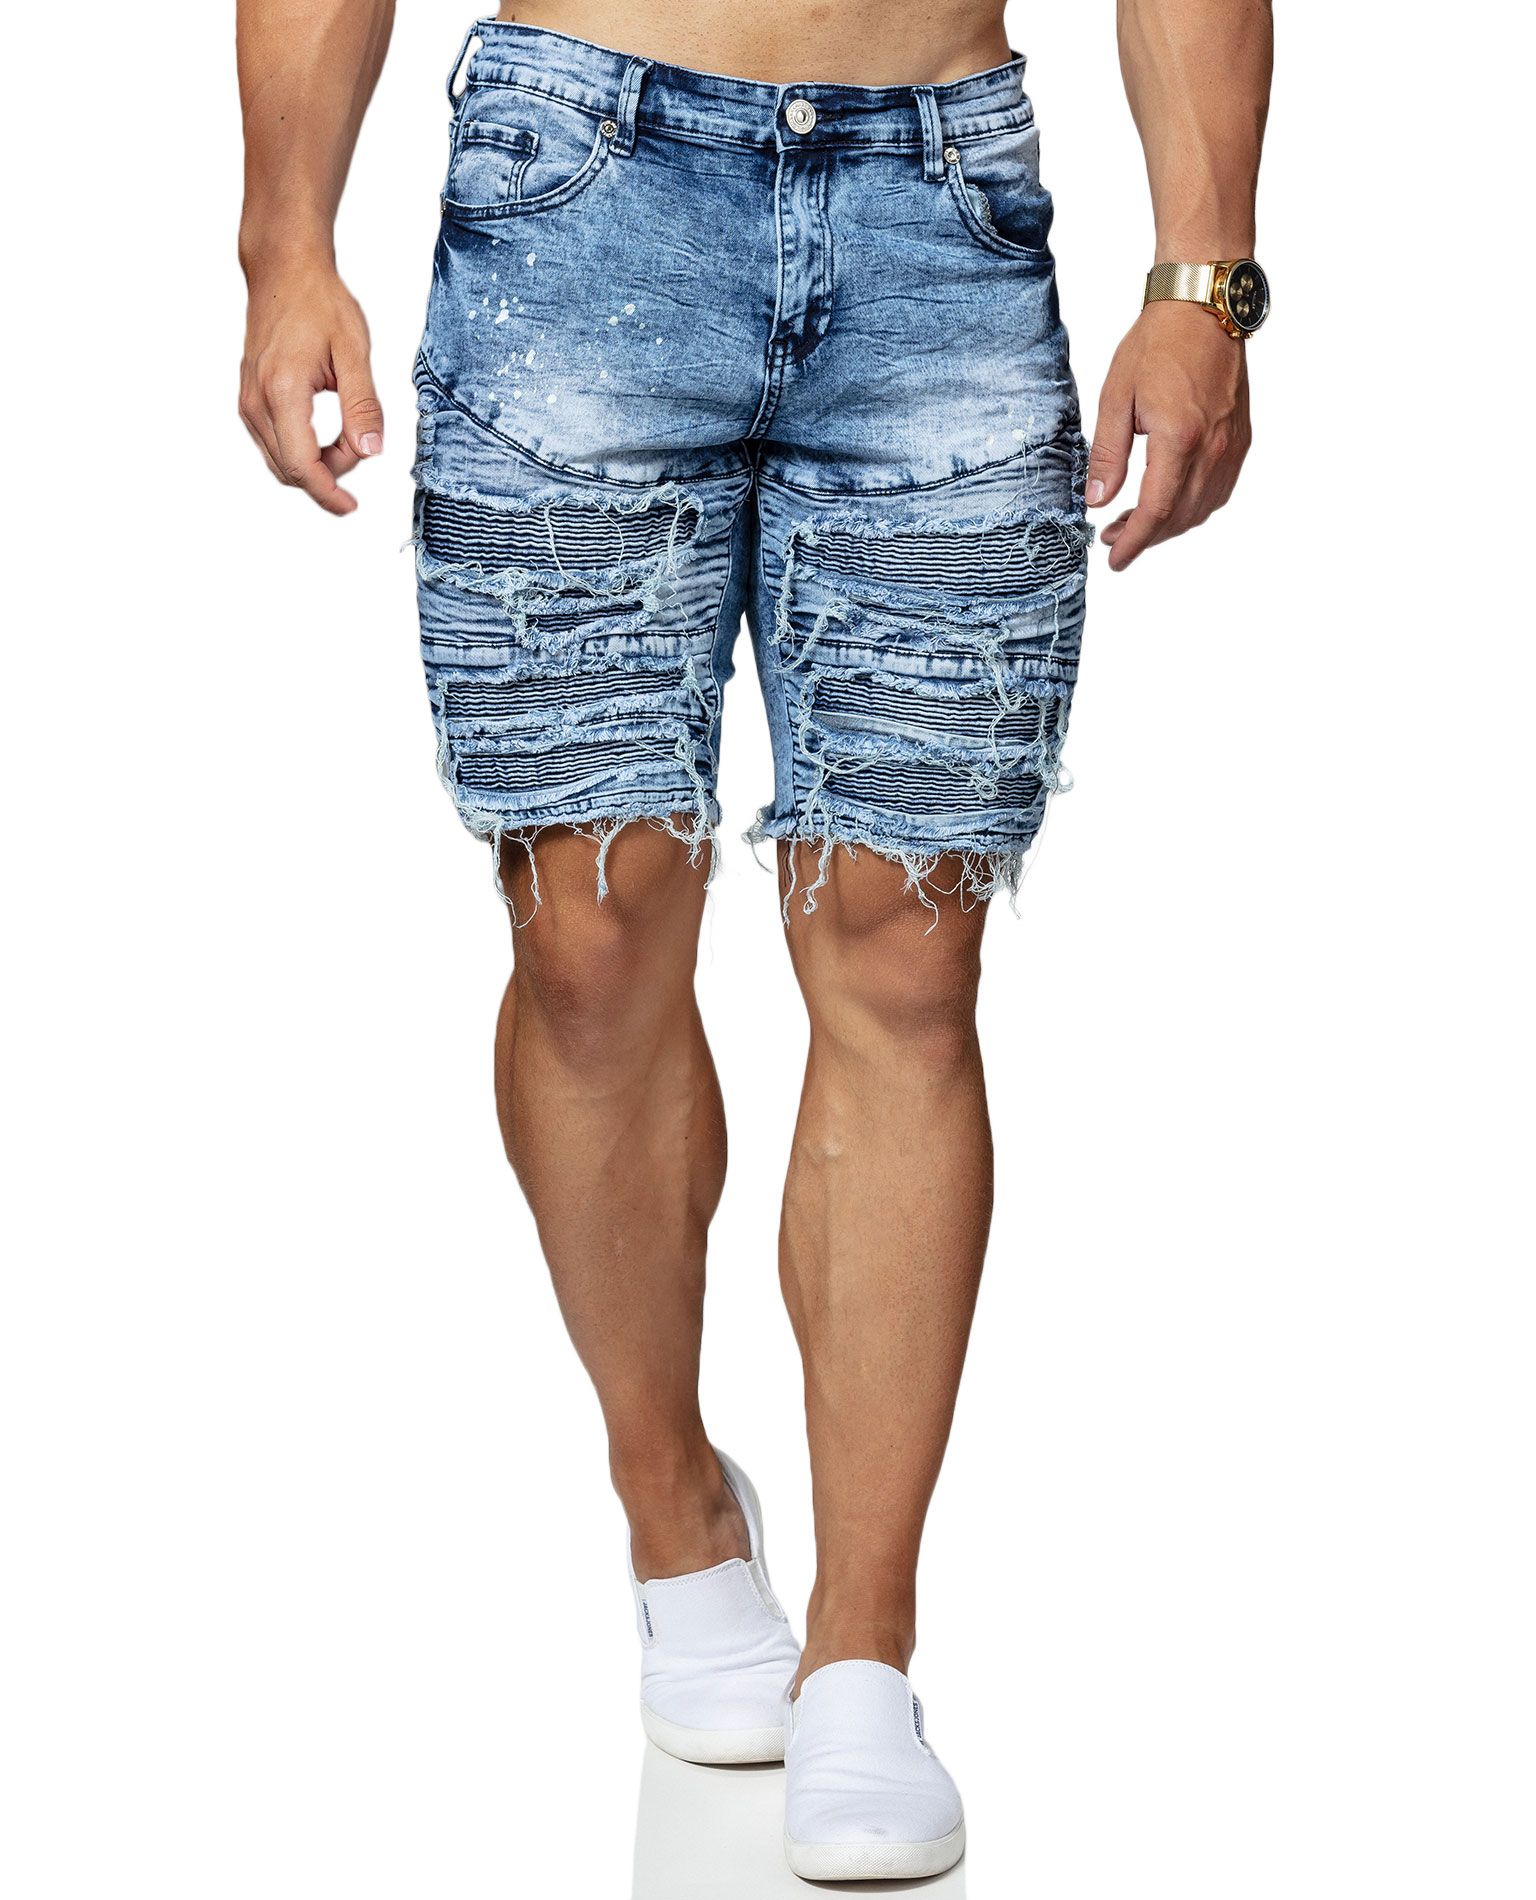 Blue Ripped Shorts Jerone - 8315 - Shorts - Jerone.com